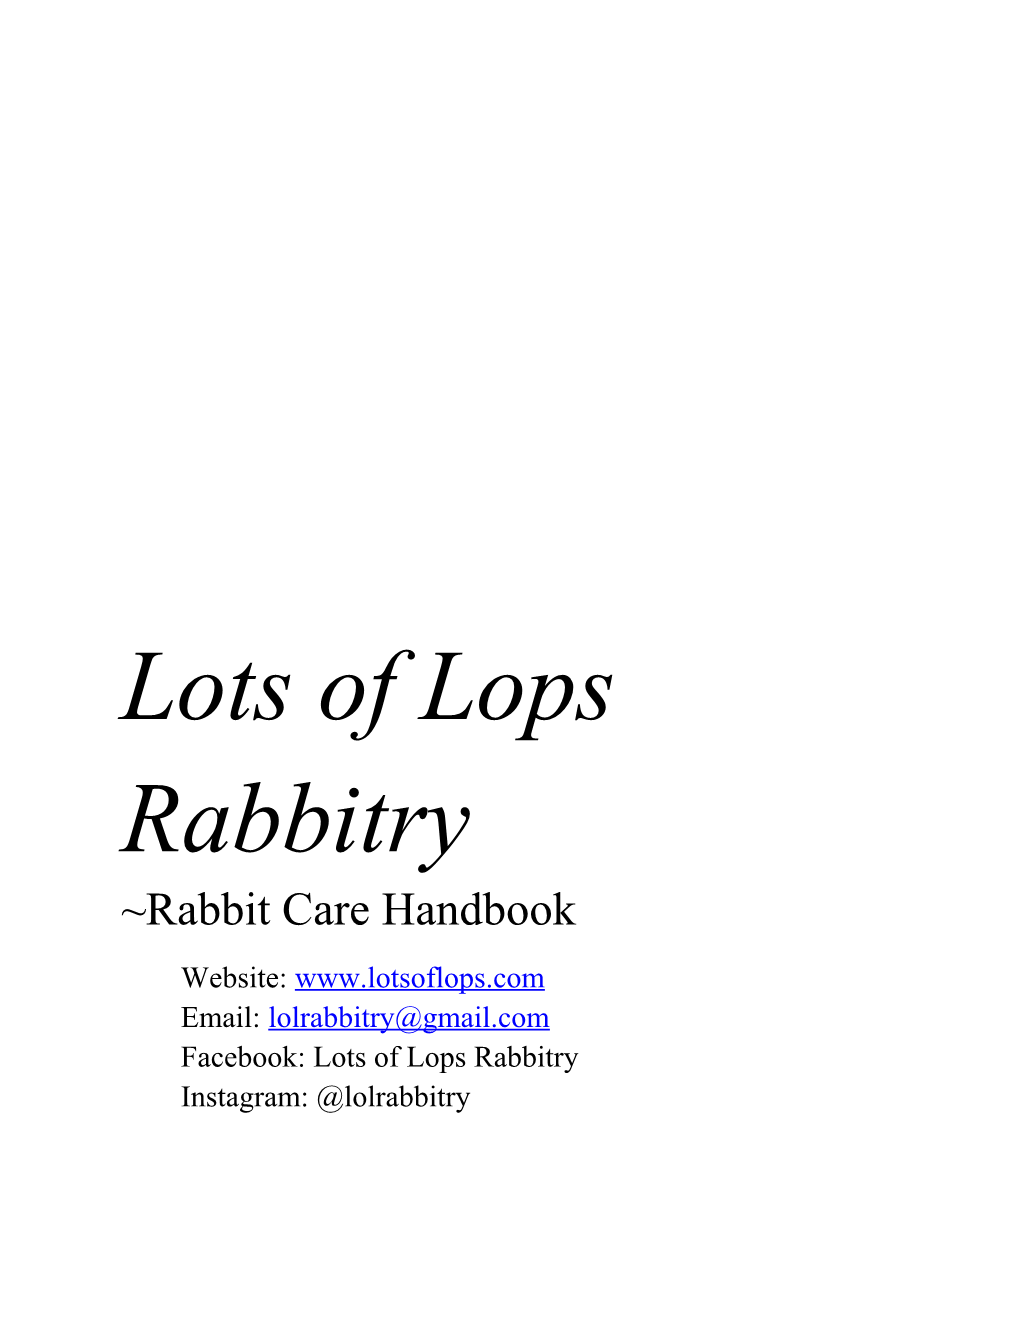 Lots of Lops Rabbitry Rabbit Care Handbook